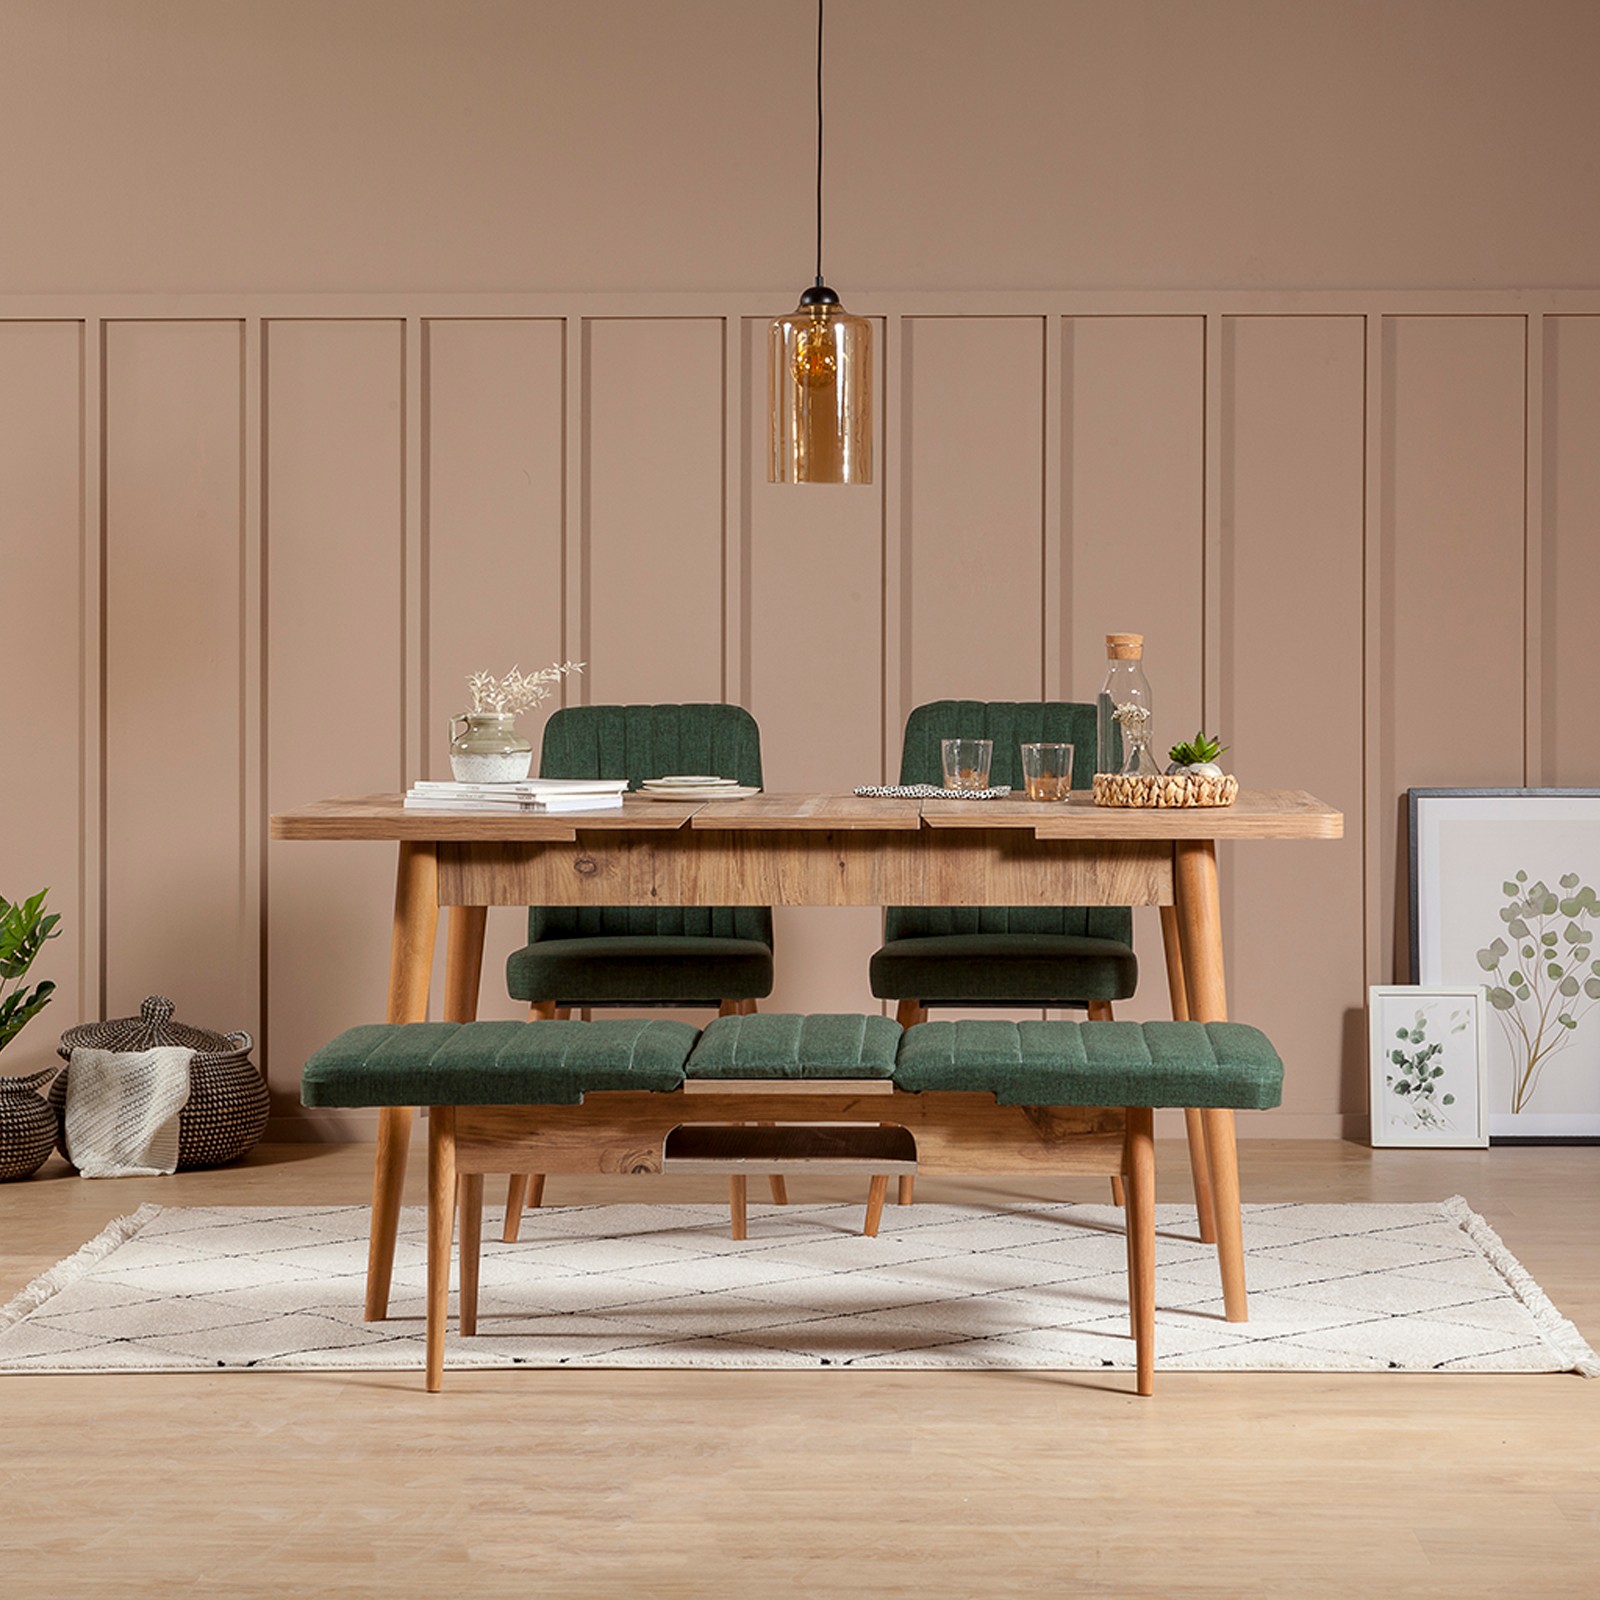 Malva 4-piece Extendable Table and Chair Set Melamine Panel Ochre and Fir Green